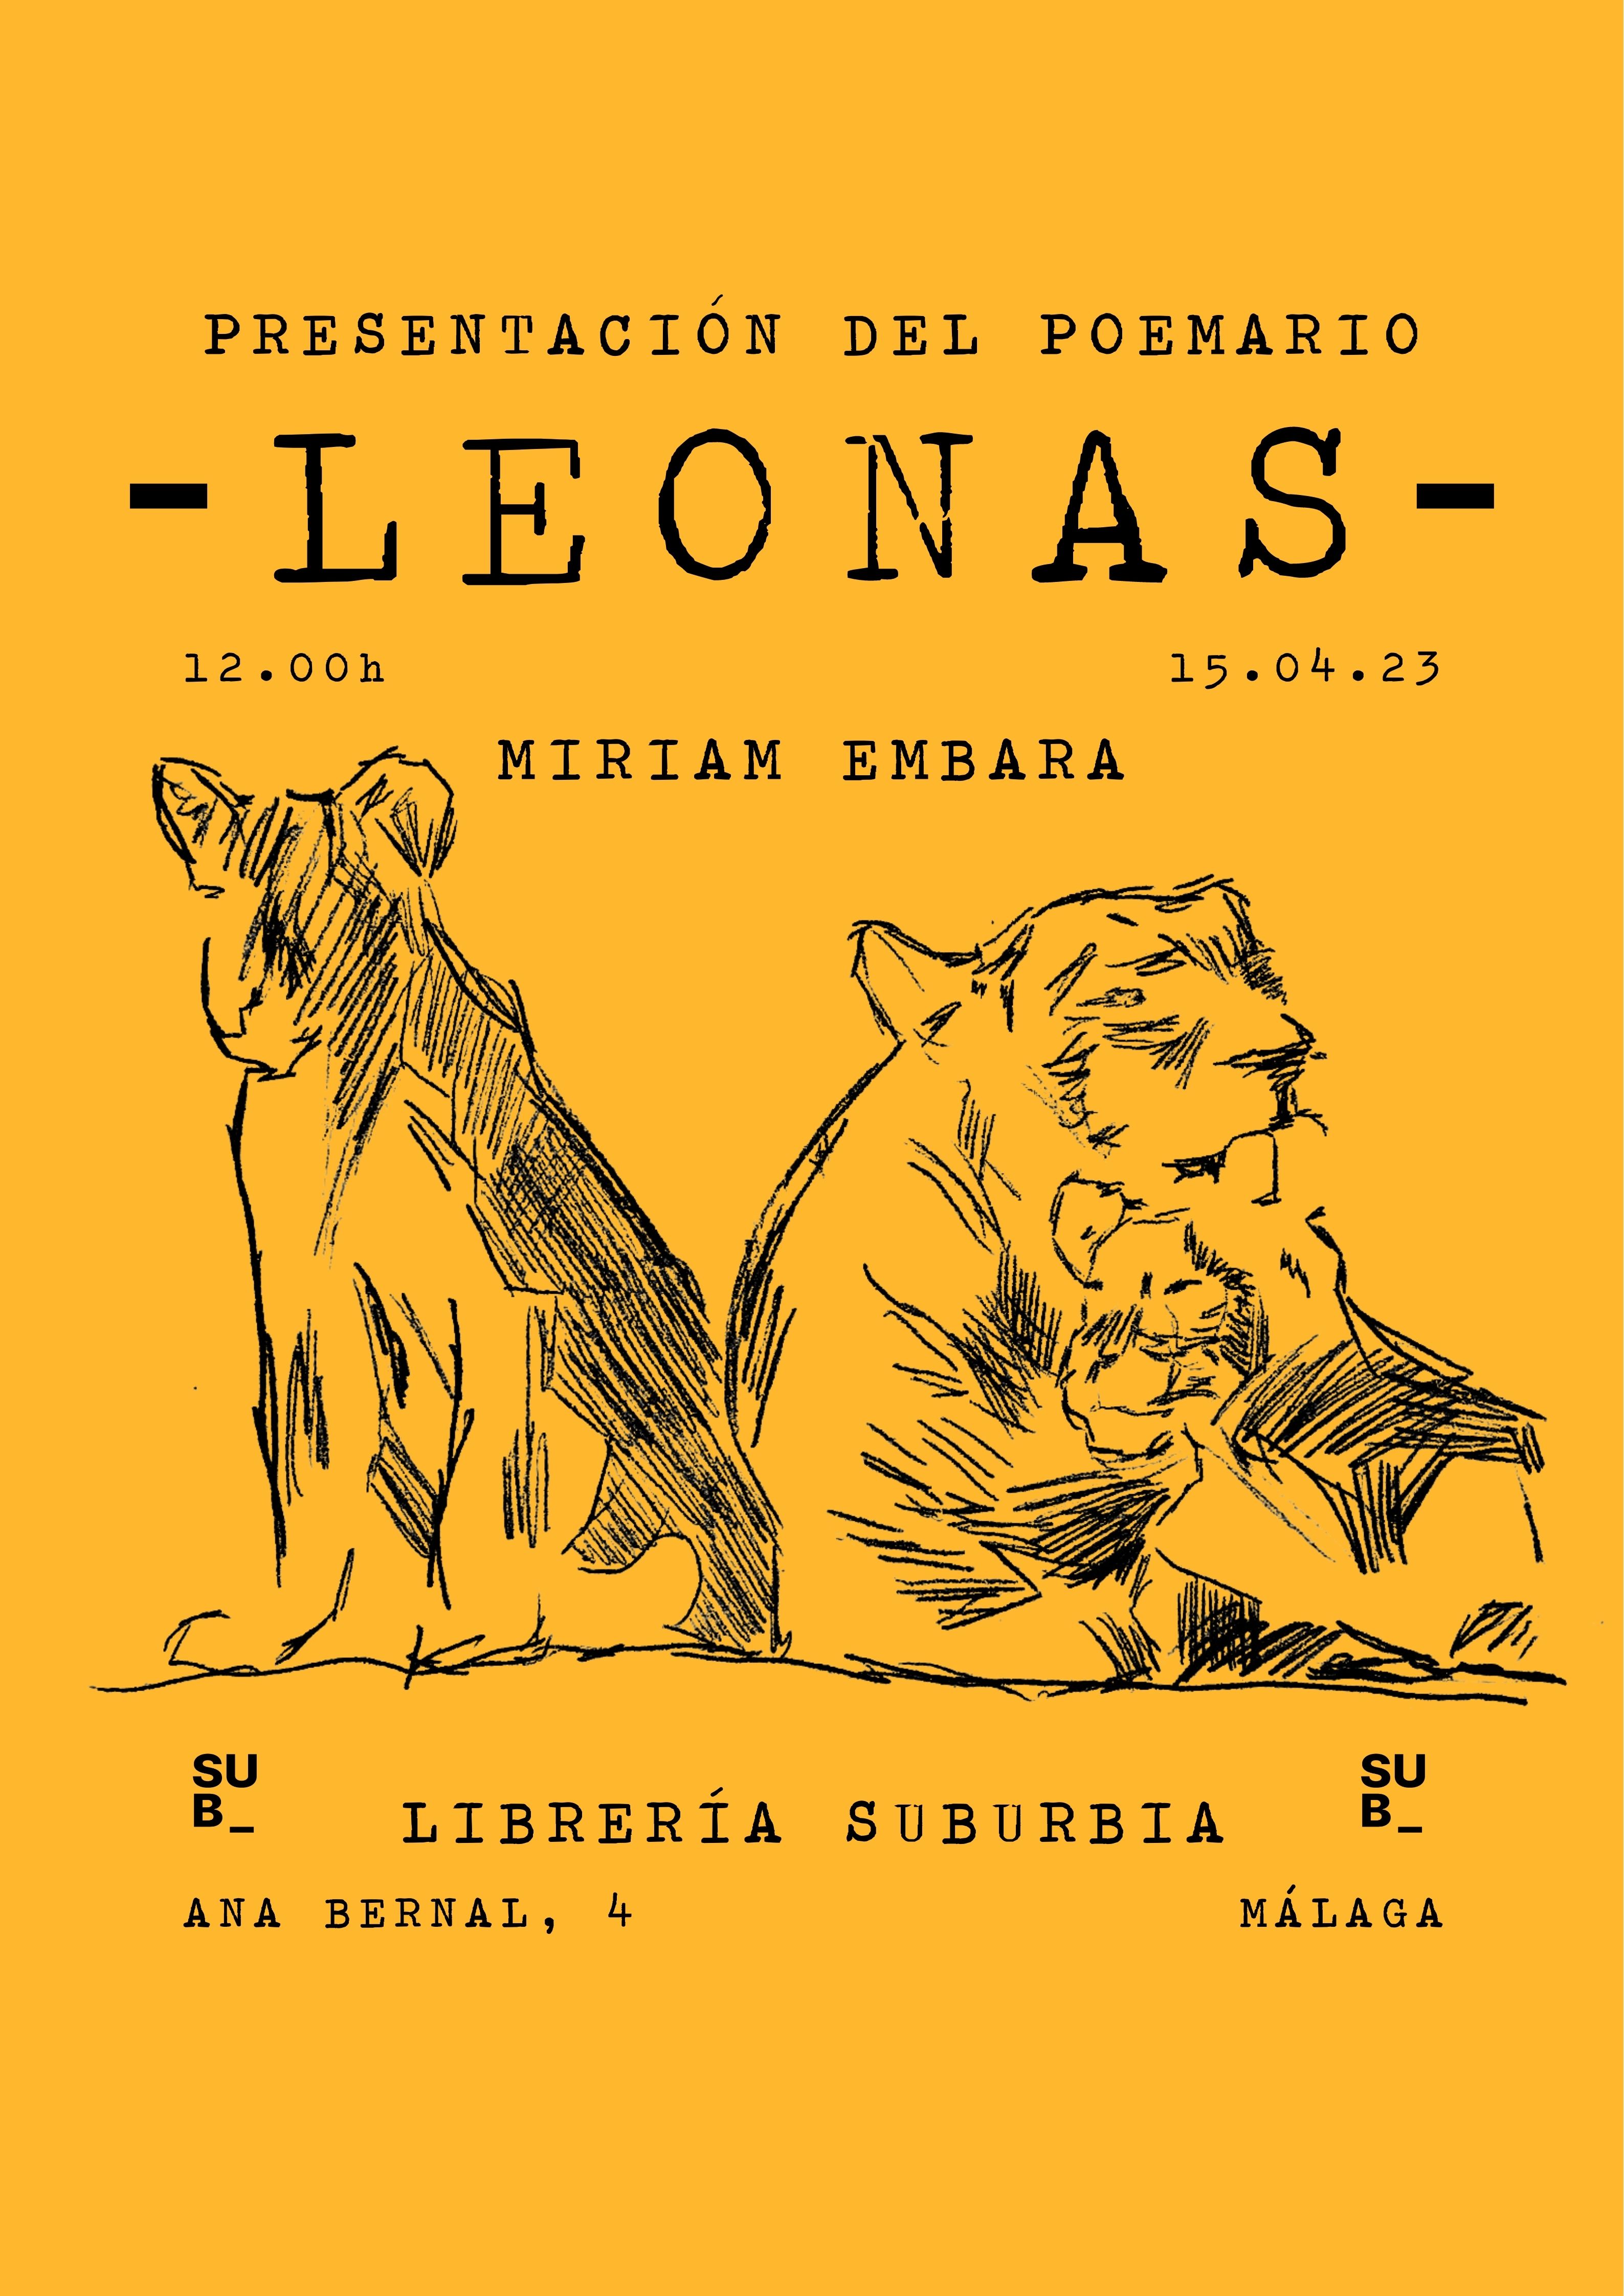 Las Leonas viajan a Málaga! 